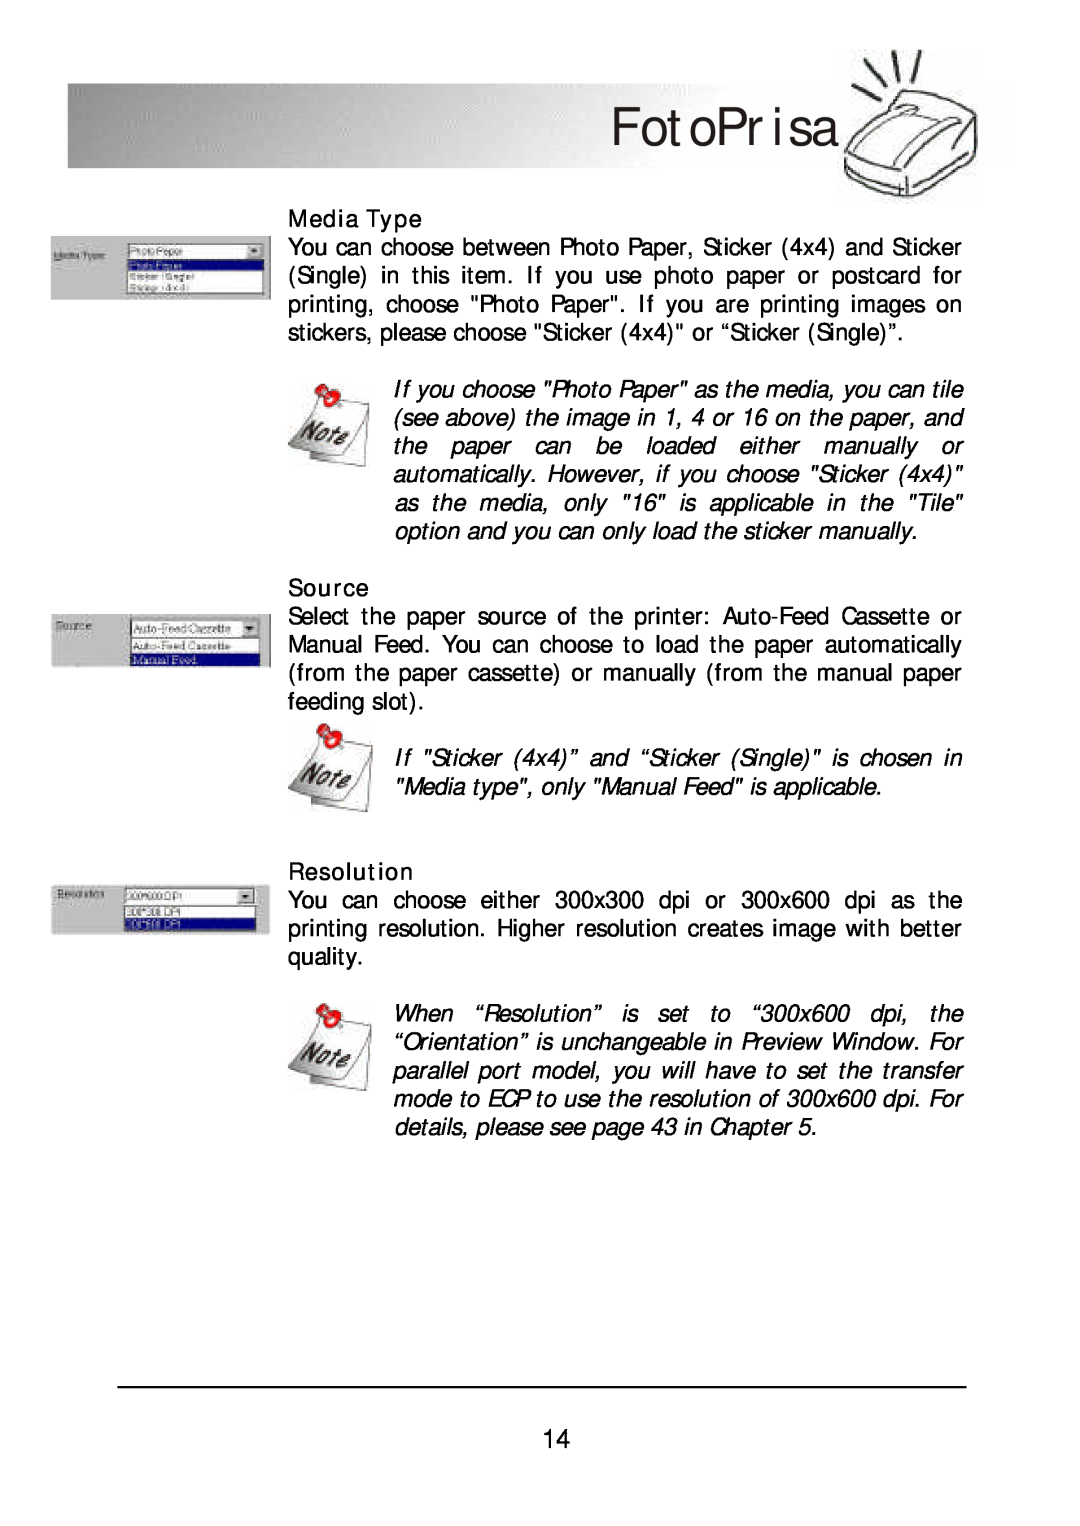 Acer 300P user manual Media Type, Source, Resolution, FotoPrisa 